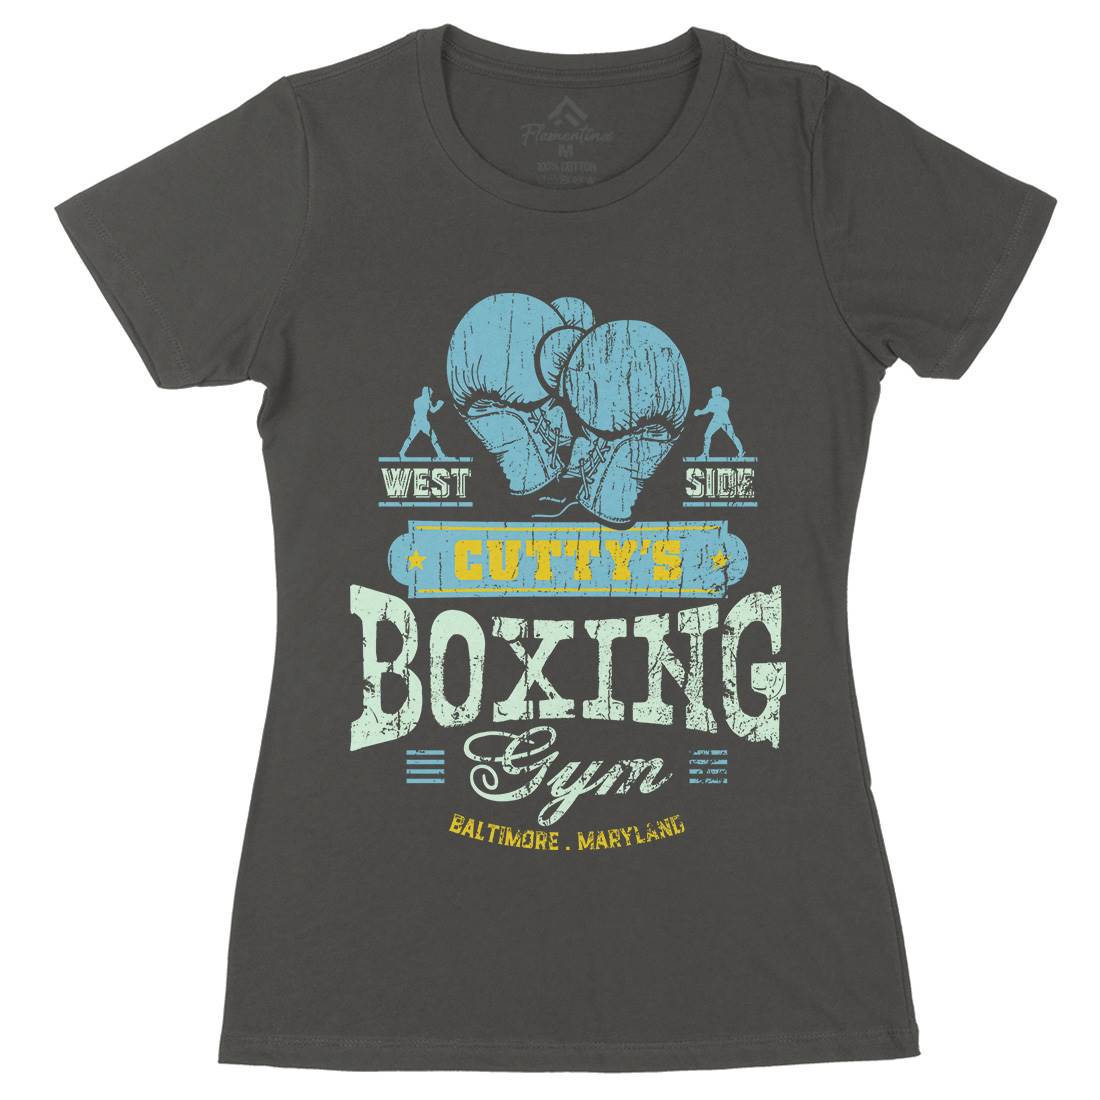 Cuttys Boxing Gym Womens Organic Crew Neck T-Shirt Sport D187